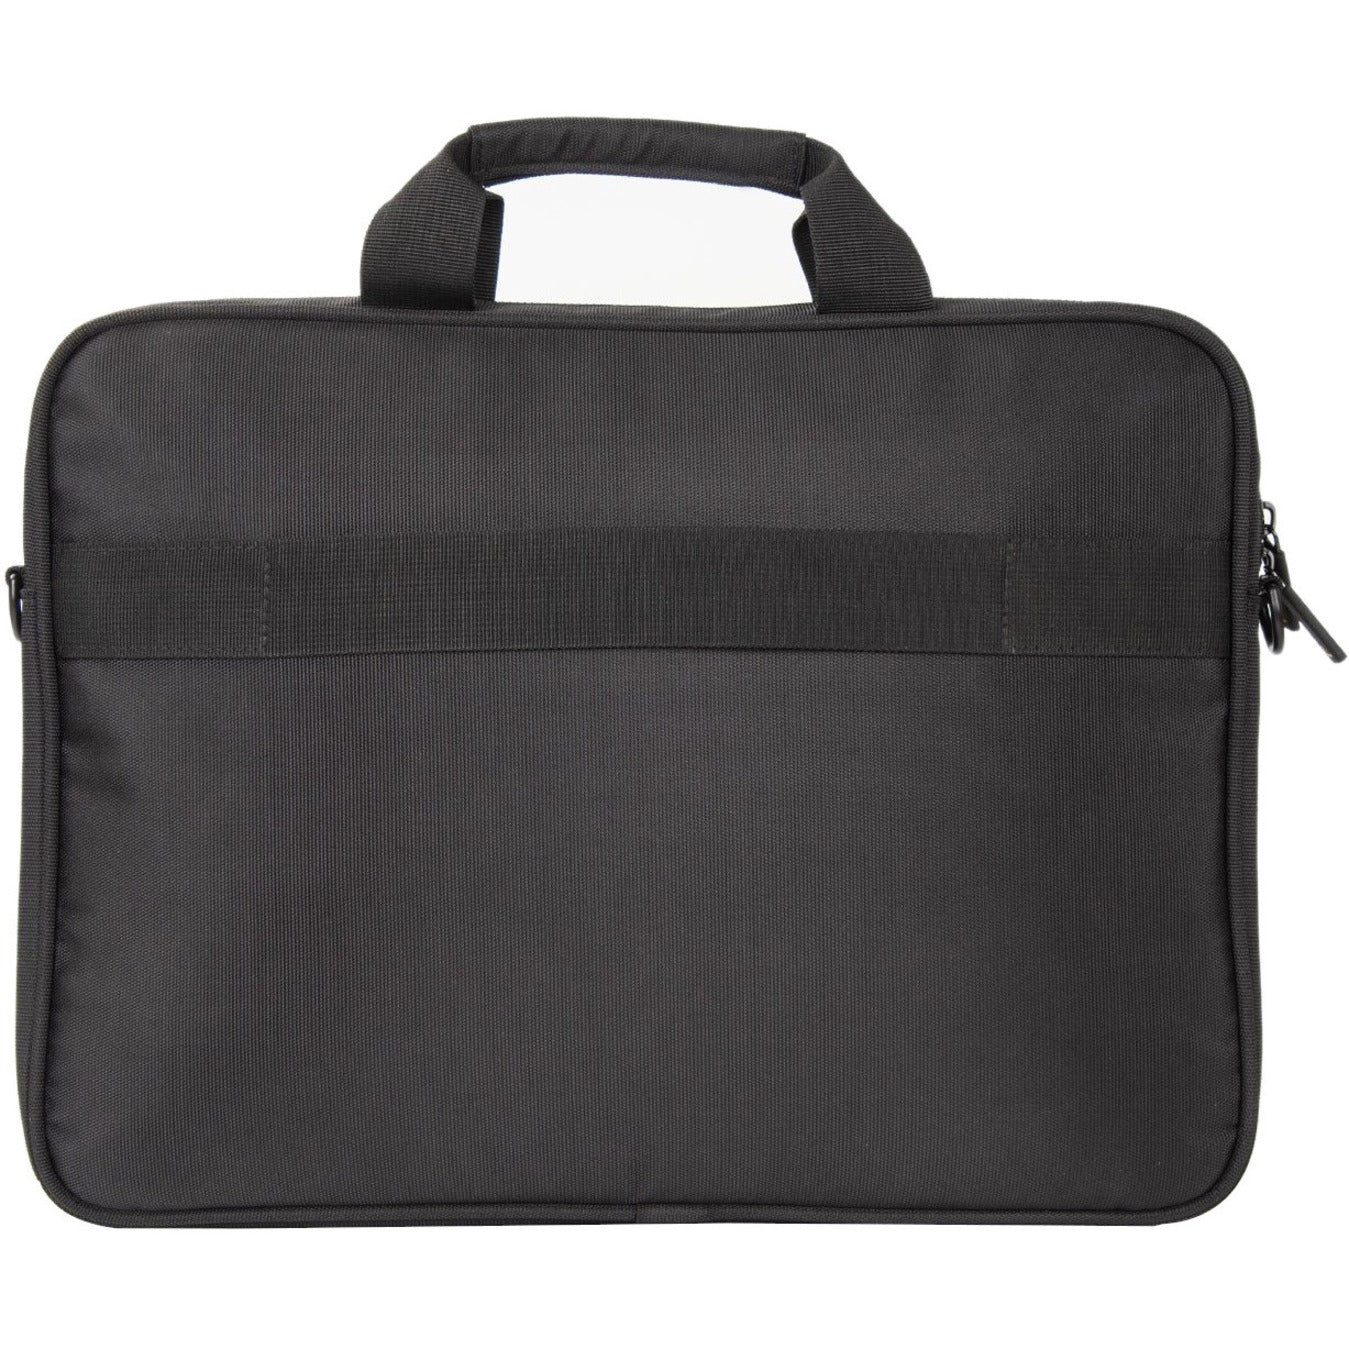 Rocstor Y1CC001-B1 Premium Universal Laptop Carrying Case Toploading, Fits up to 14.1" Laptop, RFID Pocket